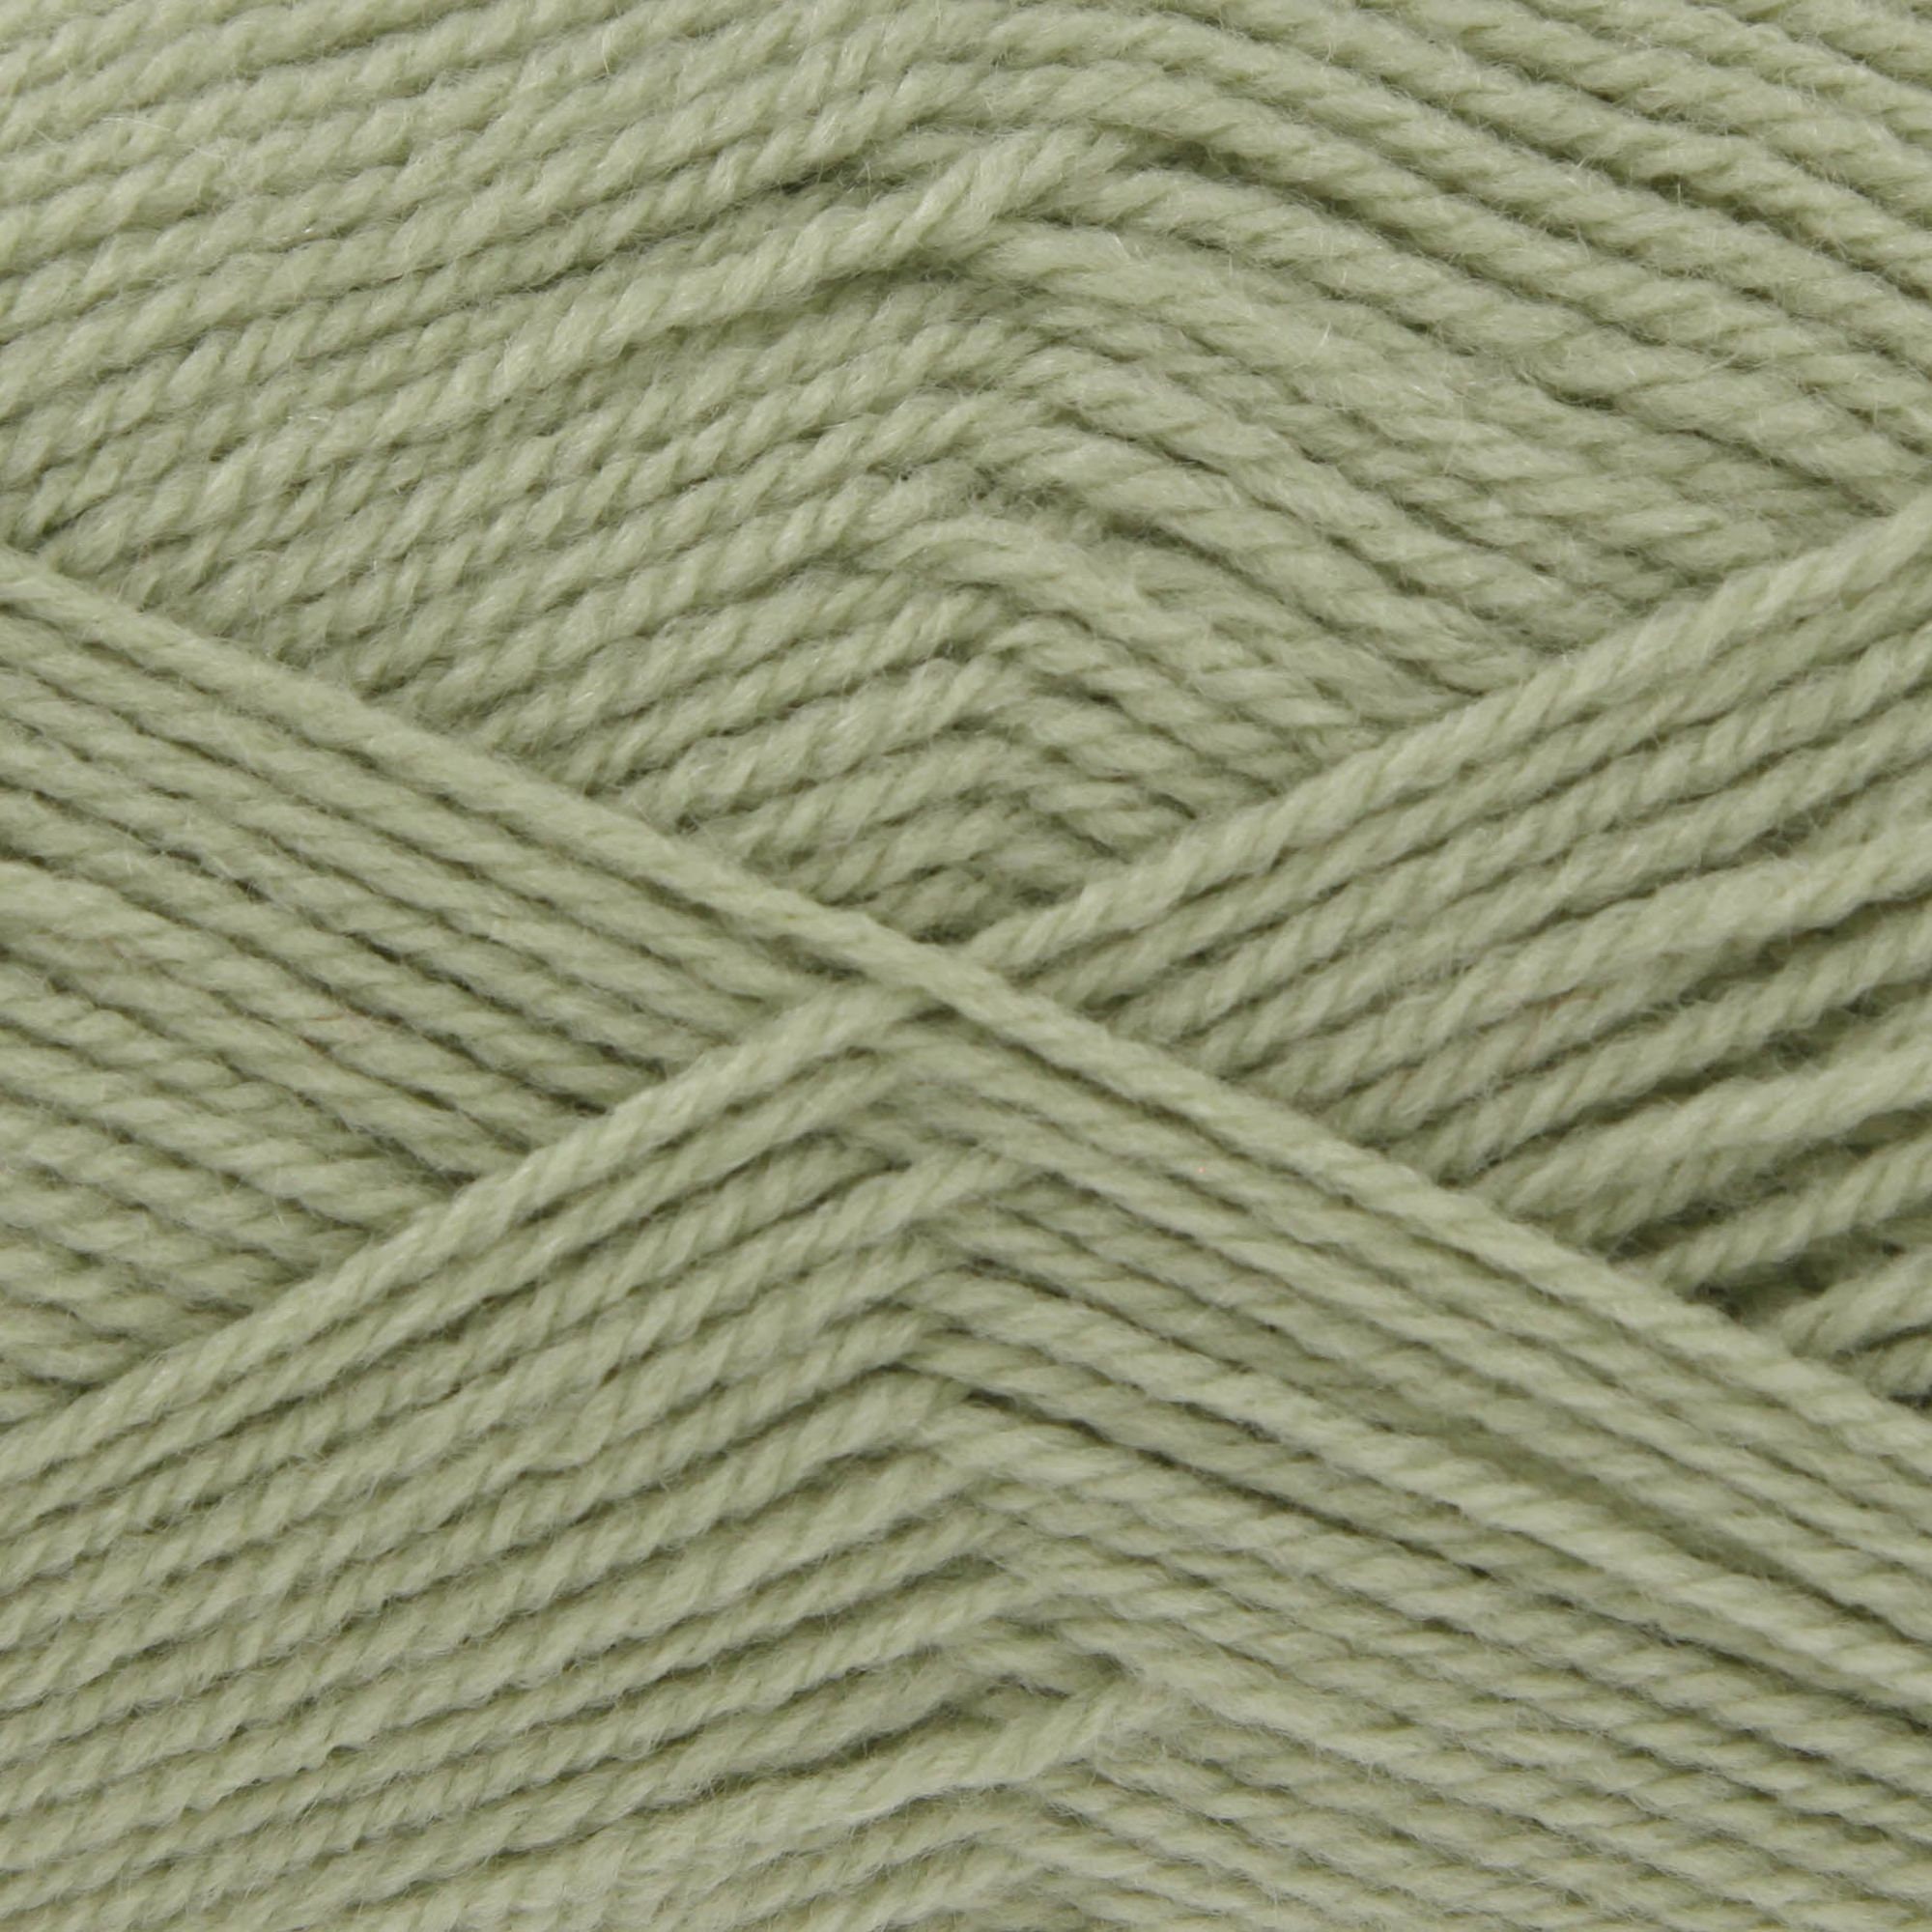 DK Knitting Wool/yarn King Cole Bamboo Cotton DK Double Knitting light  Worsted Knitting Yarn/wool 